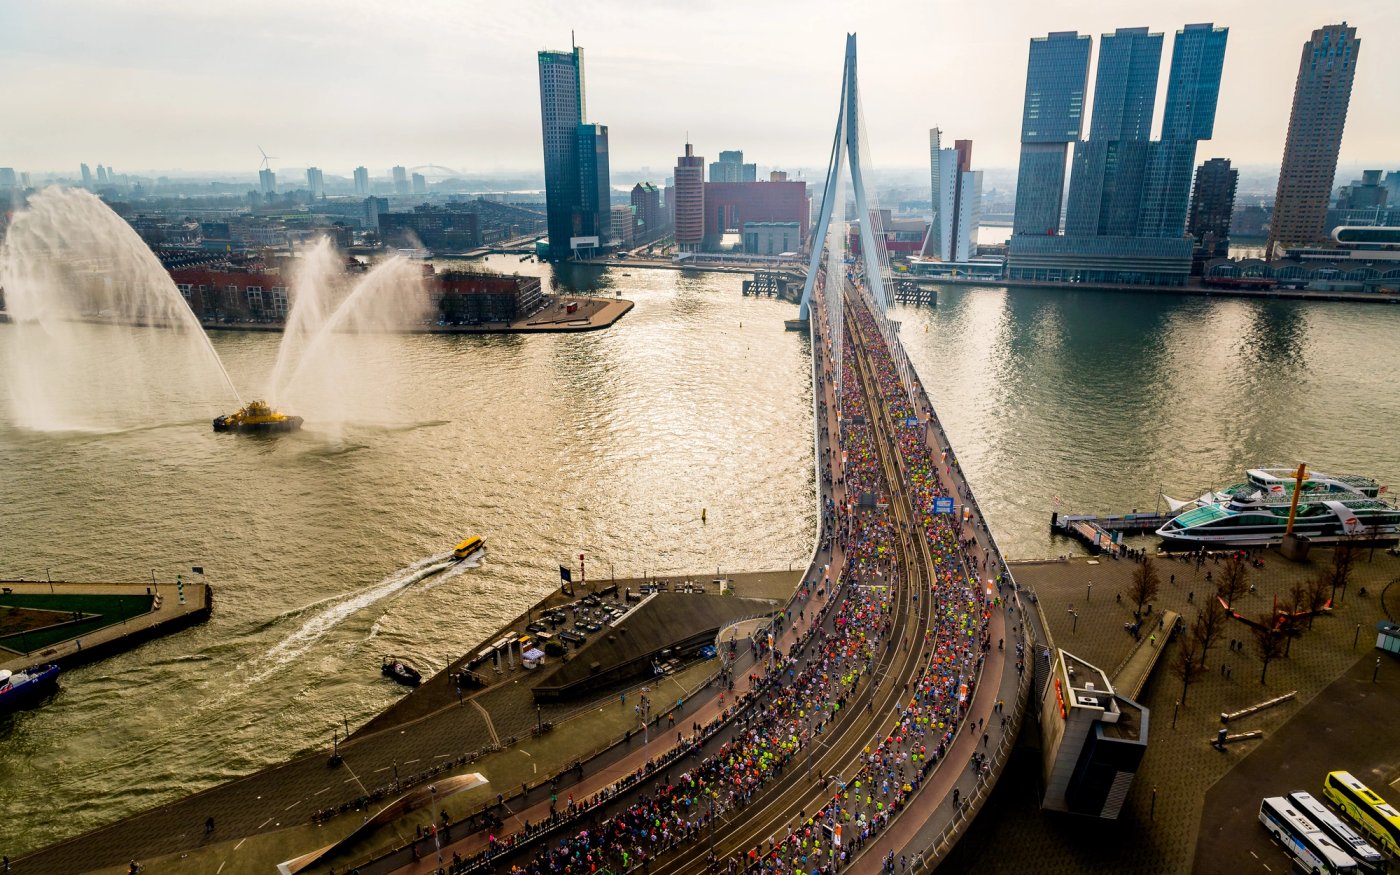 Rotterdam = marathon city. Where’s the best place to run? 